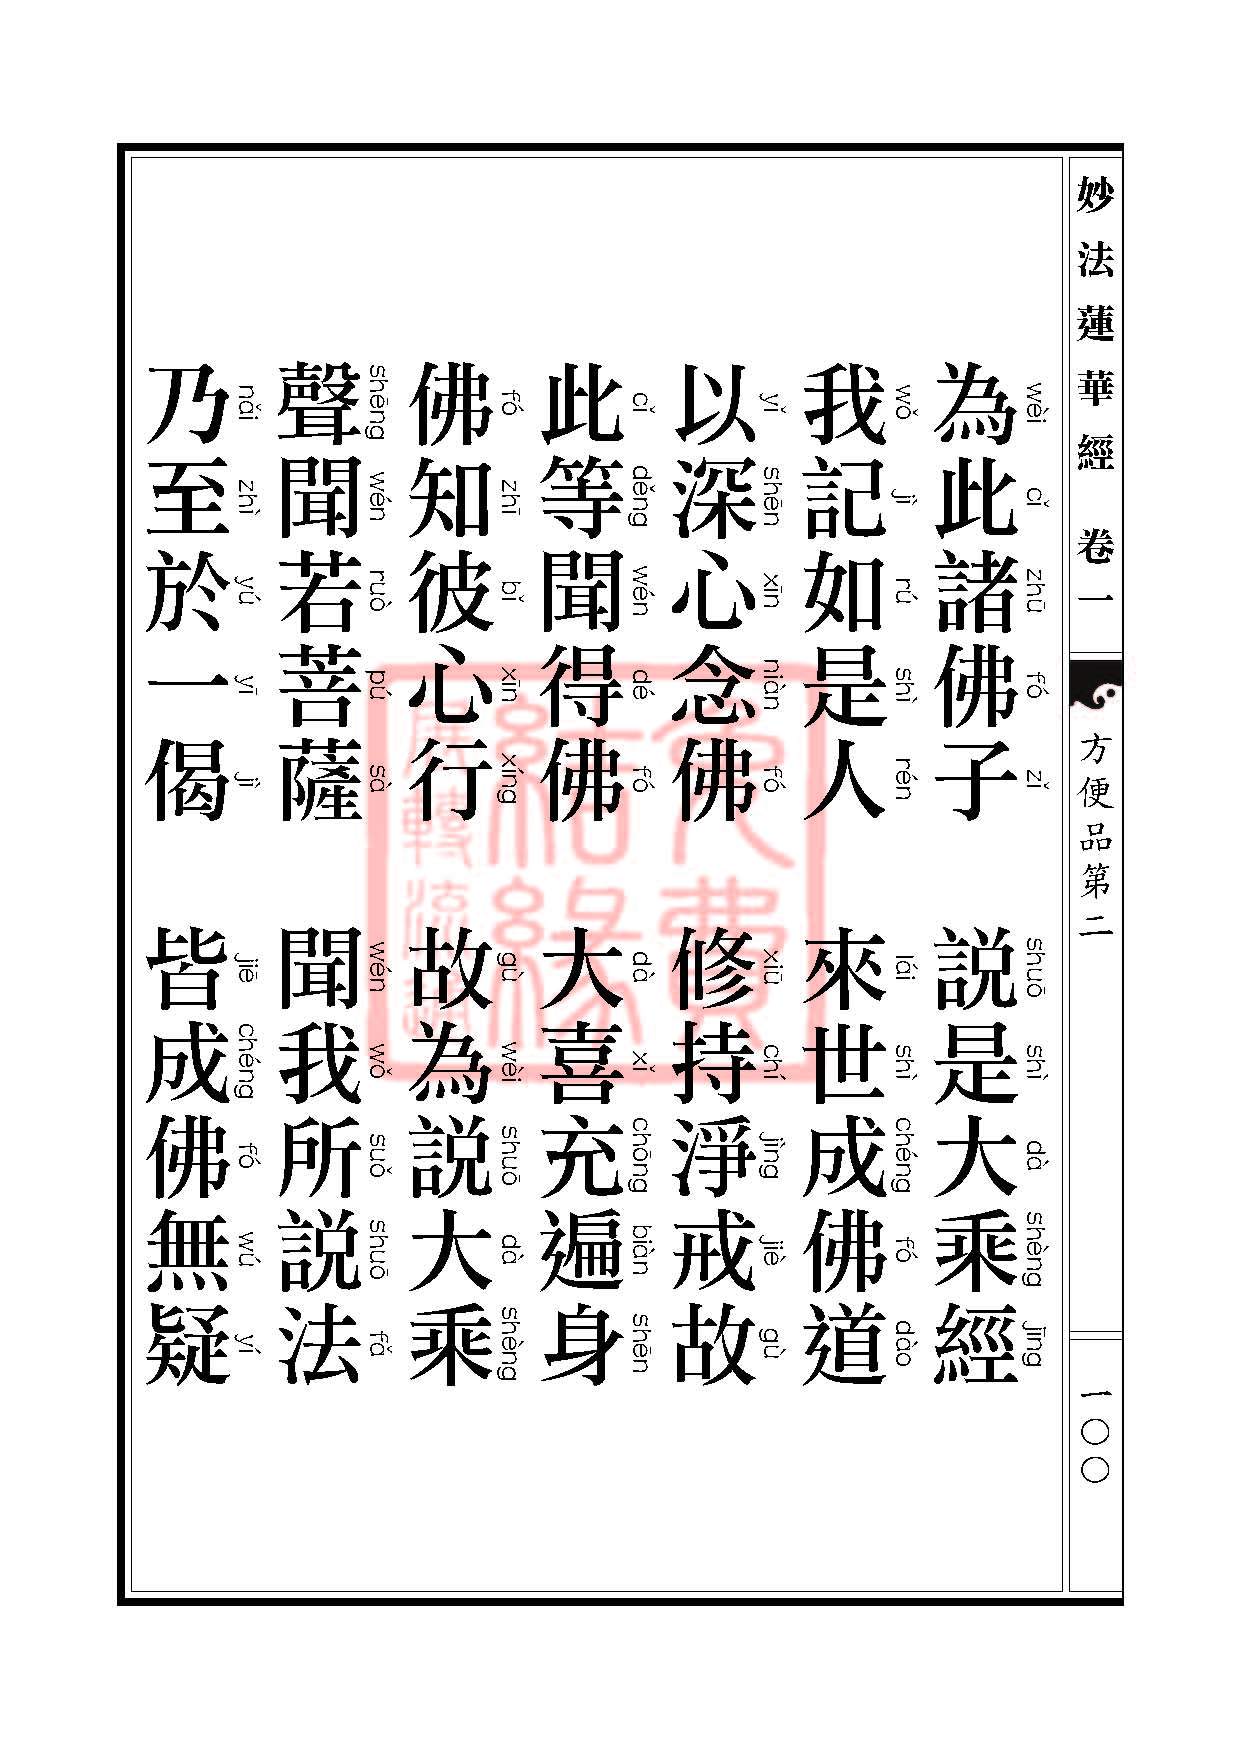 Book_FHJ_HK-A6-PY_Web_ҳ_100.jpg